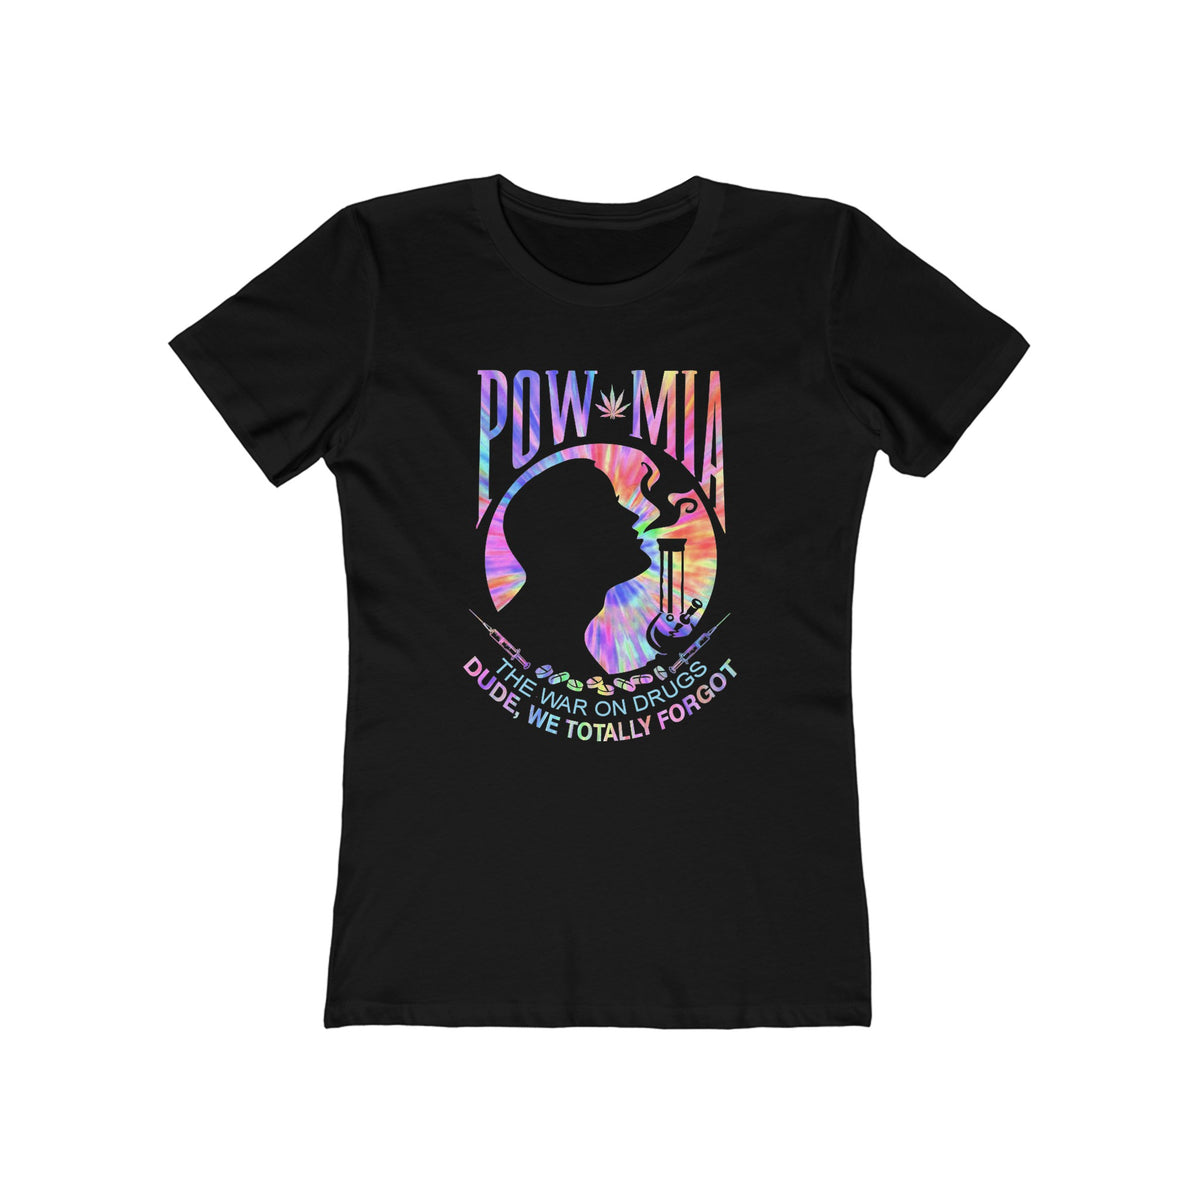 Pow/Mia (War On Drugs) - Women’s T-Shirt